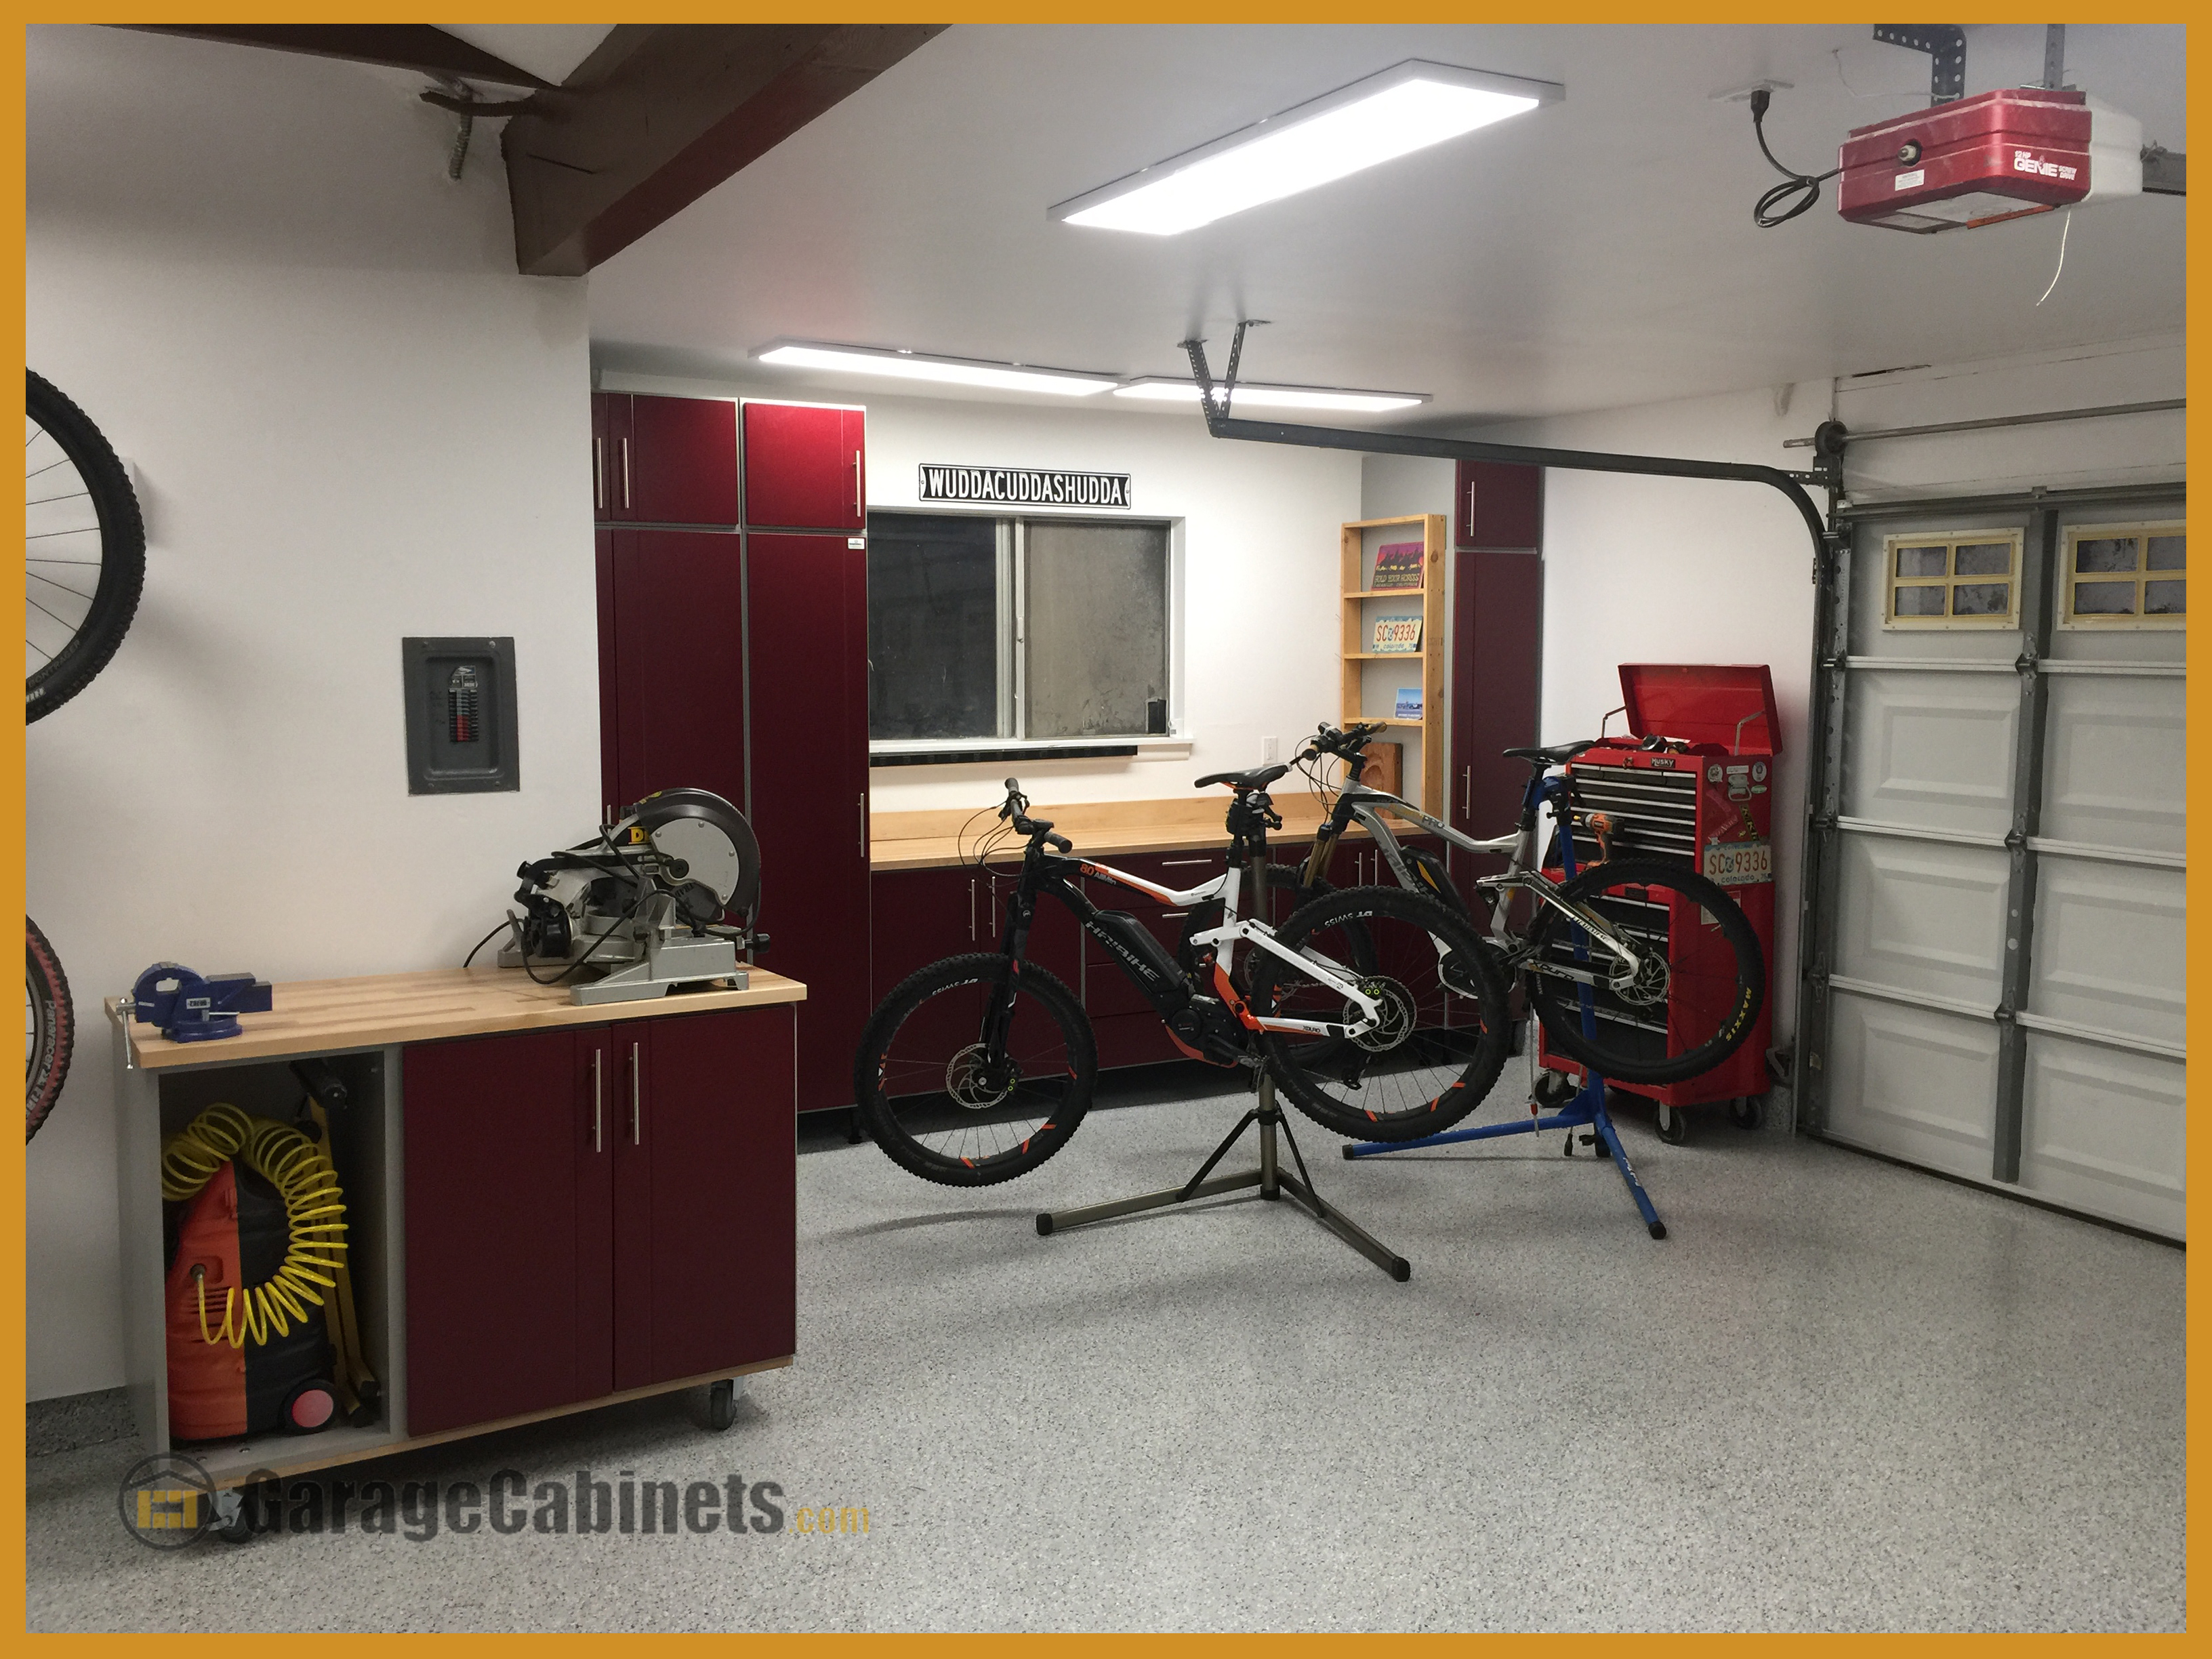 WorkSpace Garage Workbenches & Cabinets in the Multipurpose Garage